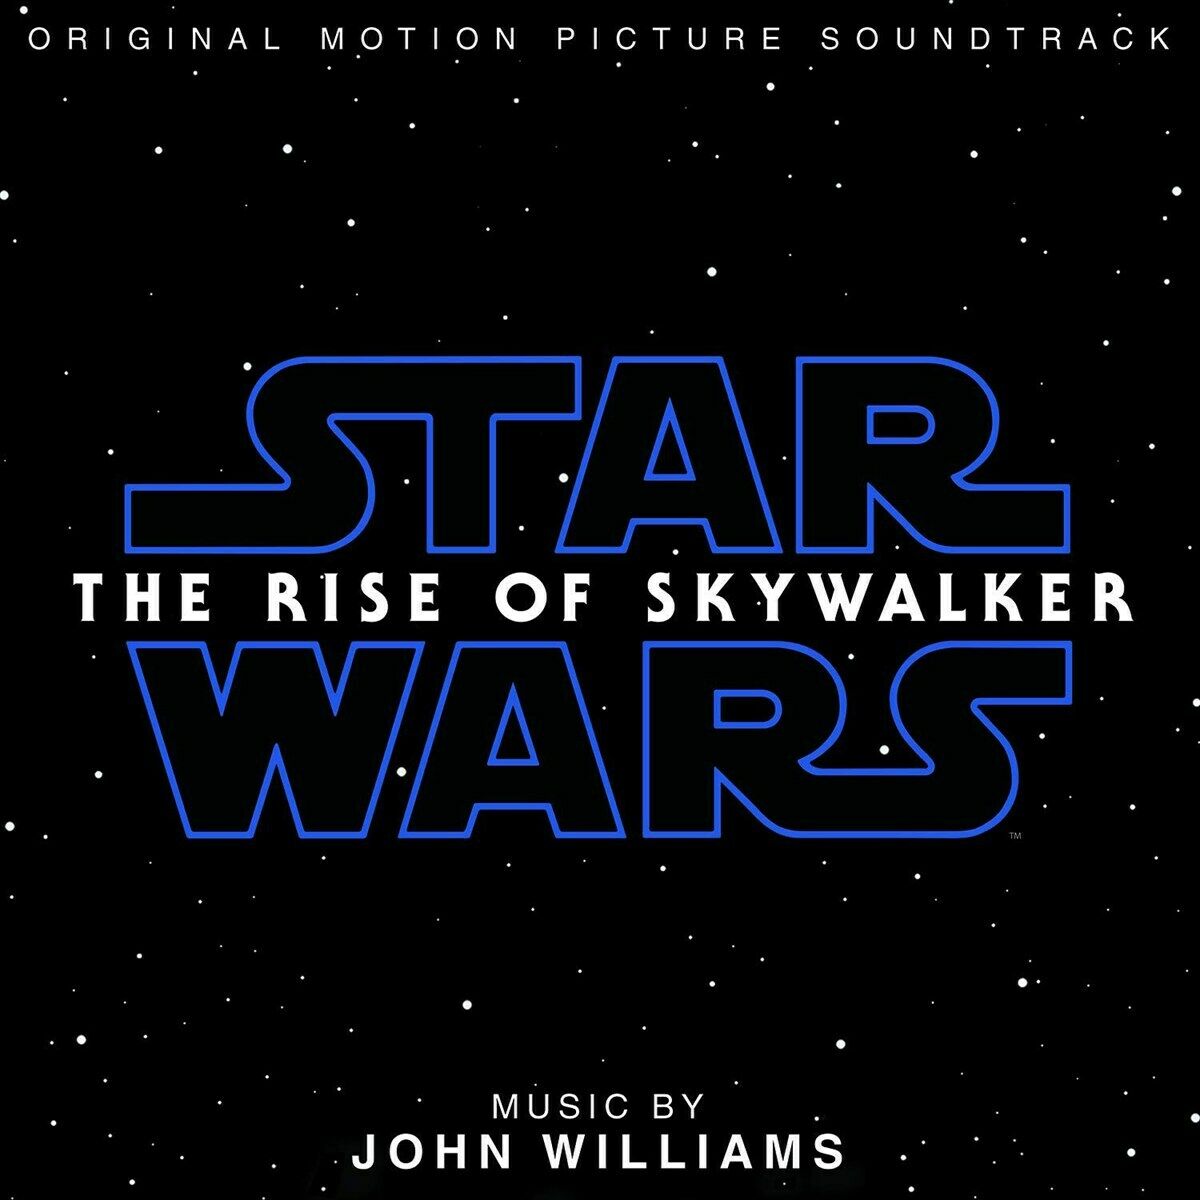 Star Wars: The Rise Of Skywalker (Original Motion Picture Soundtrack)